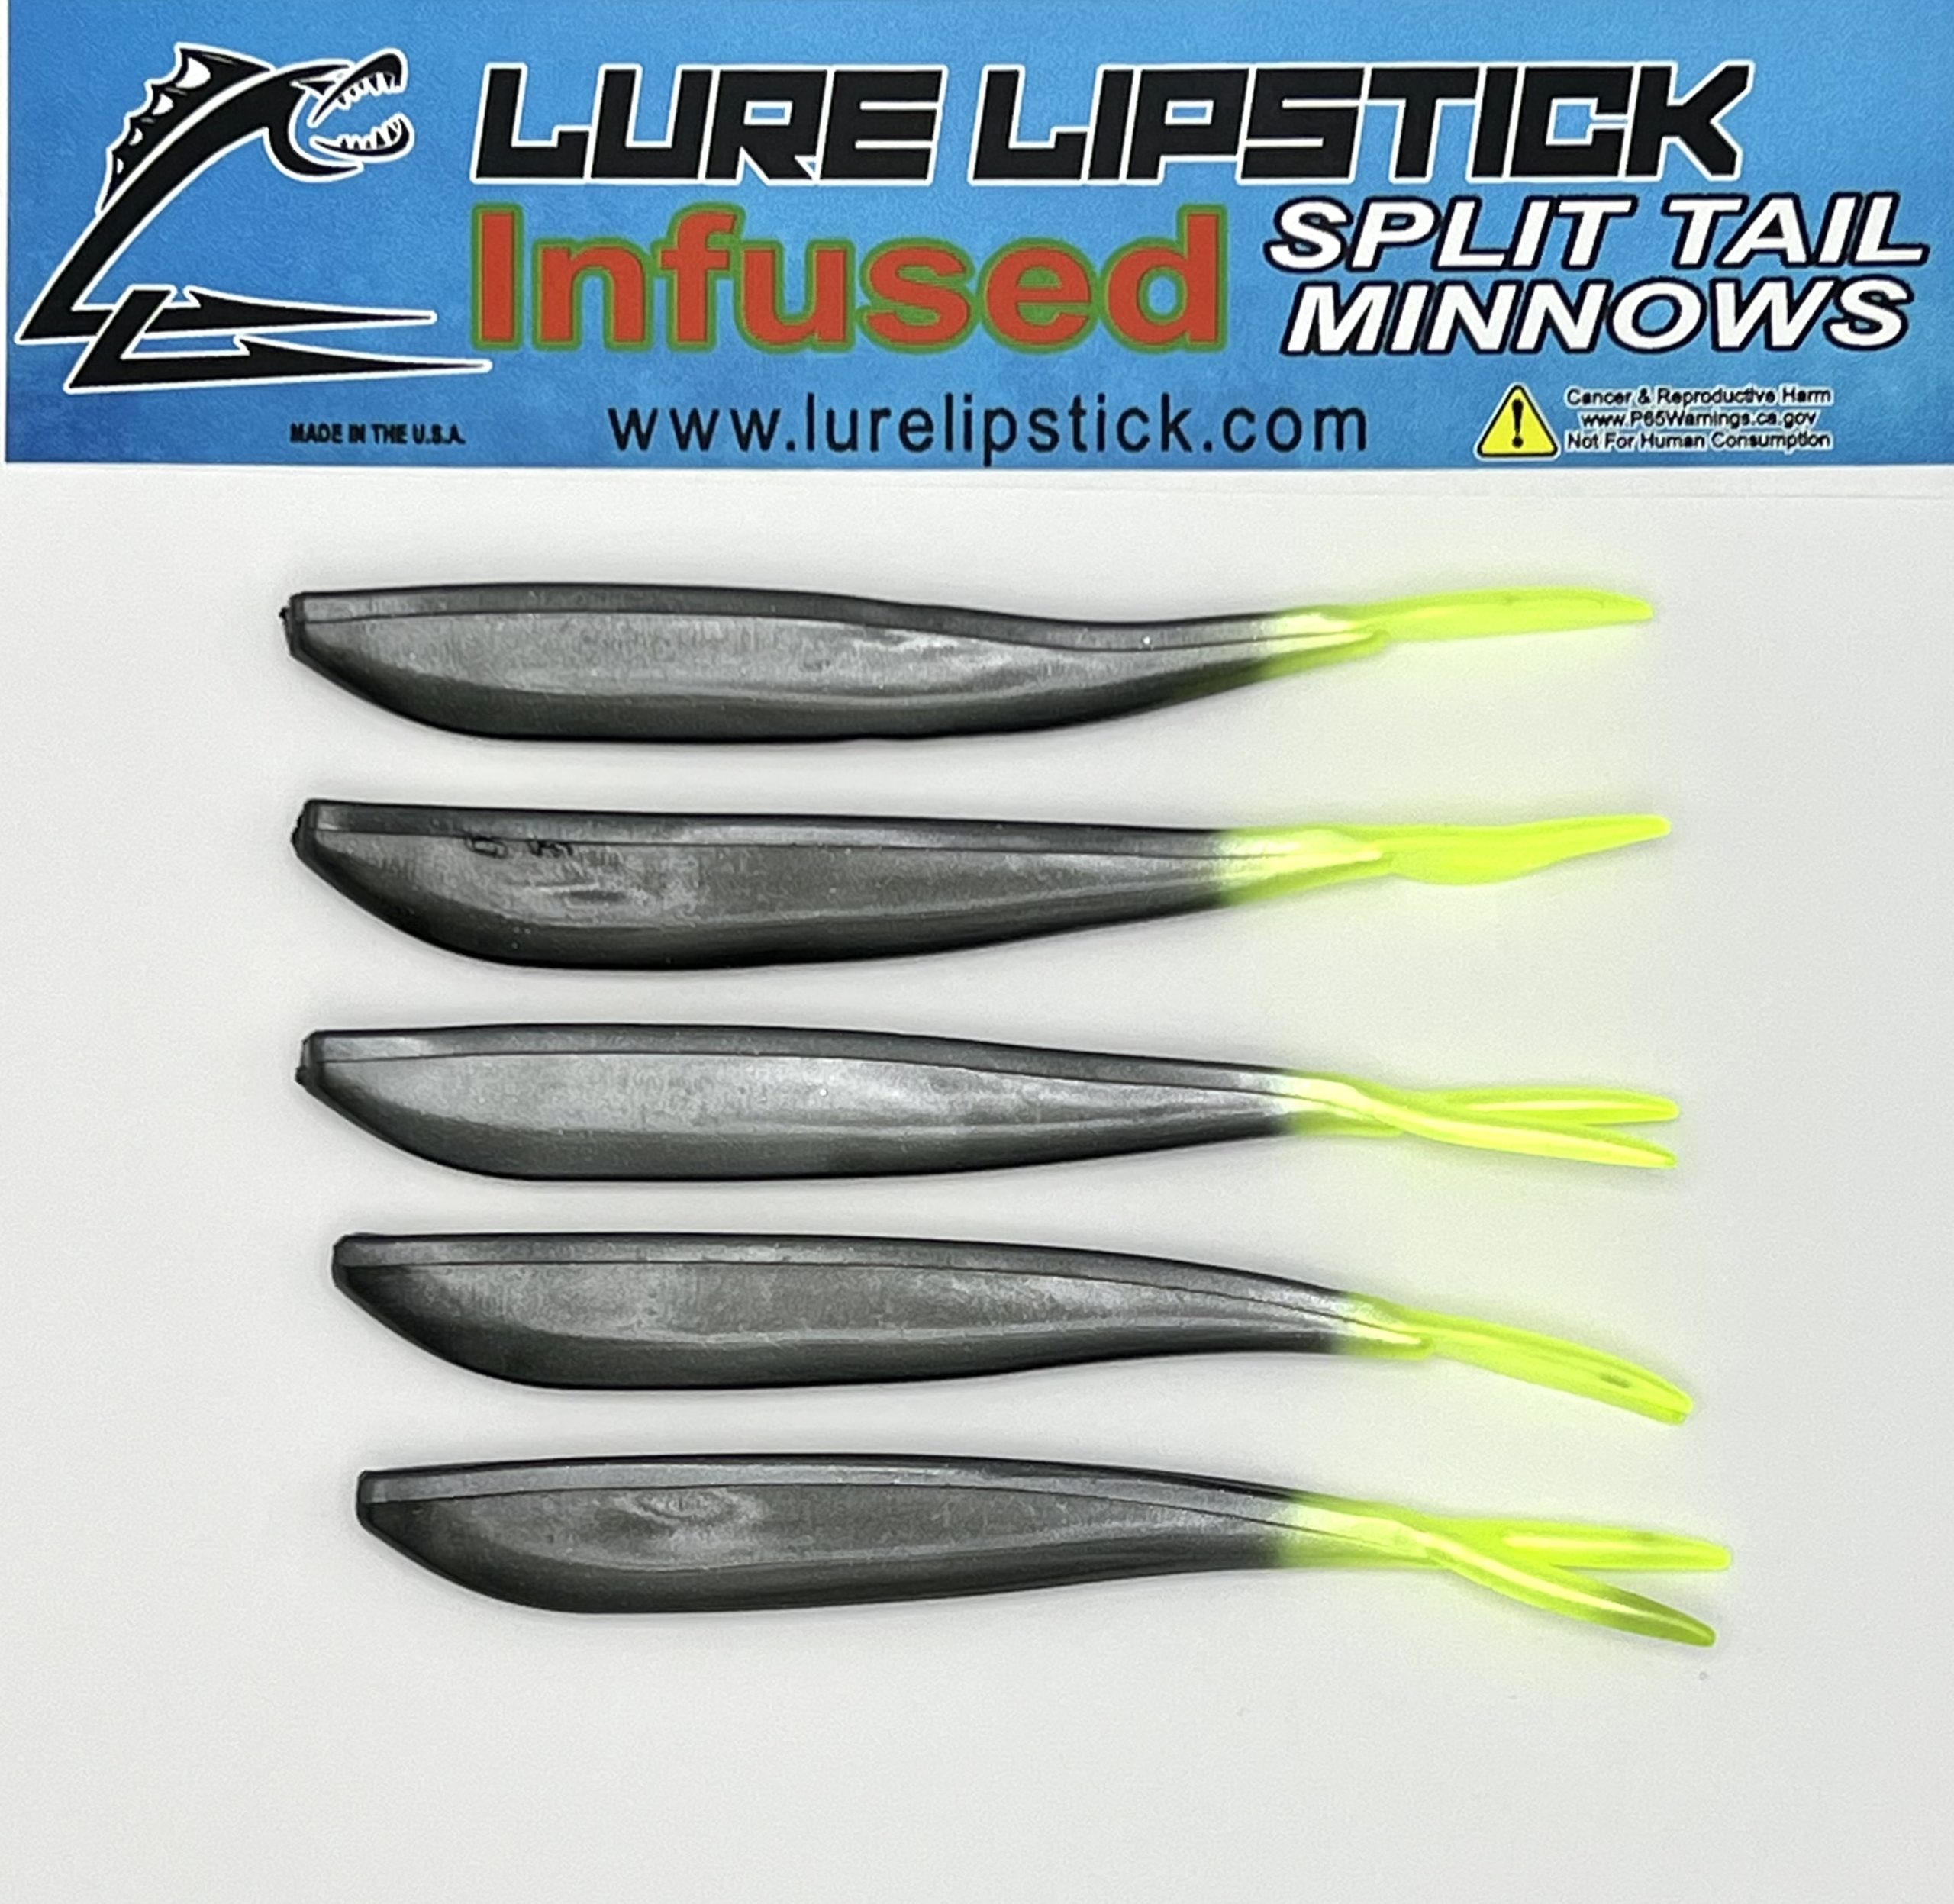 4 Inch 5 Pack Custom Split Tail Minnows - Iron Man Limage